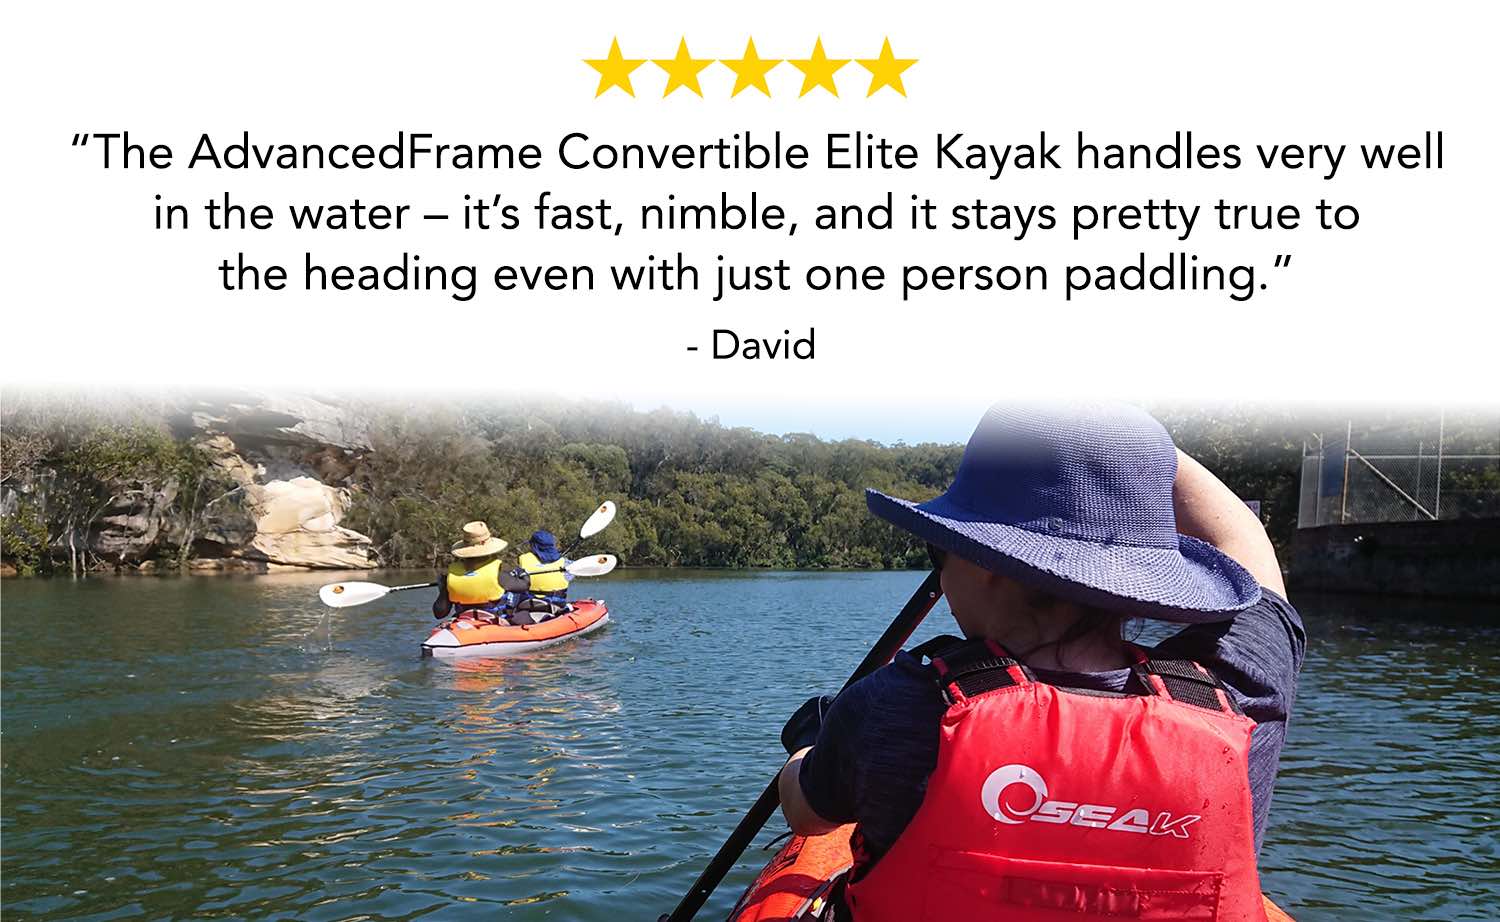 advancedframe convertible elite kayak david testimonial